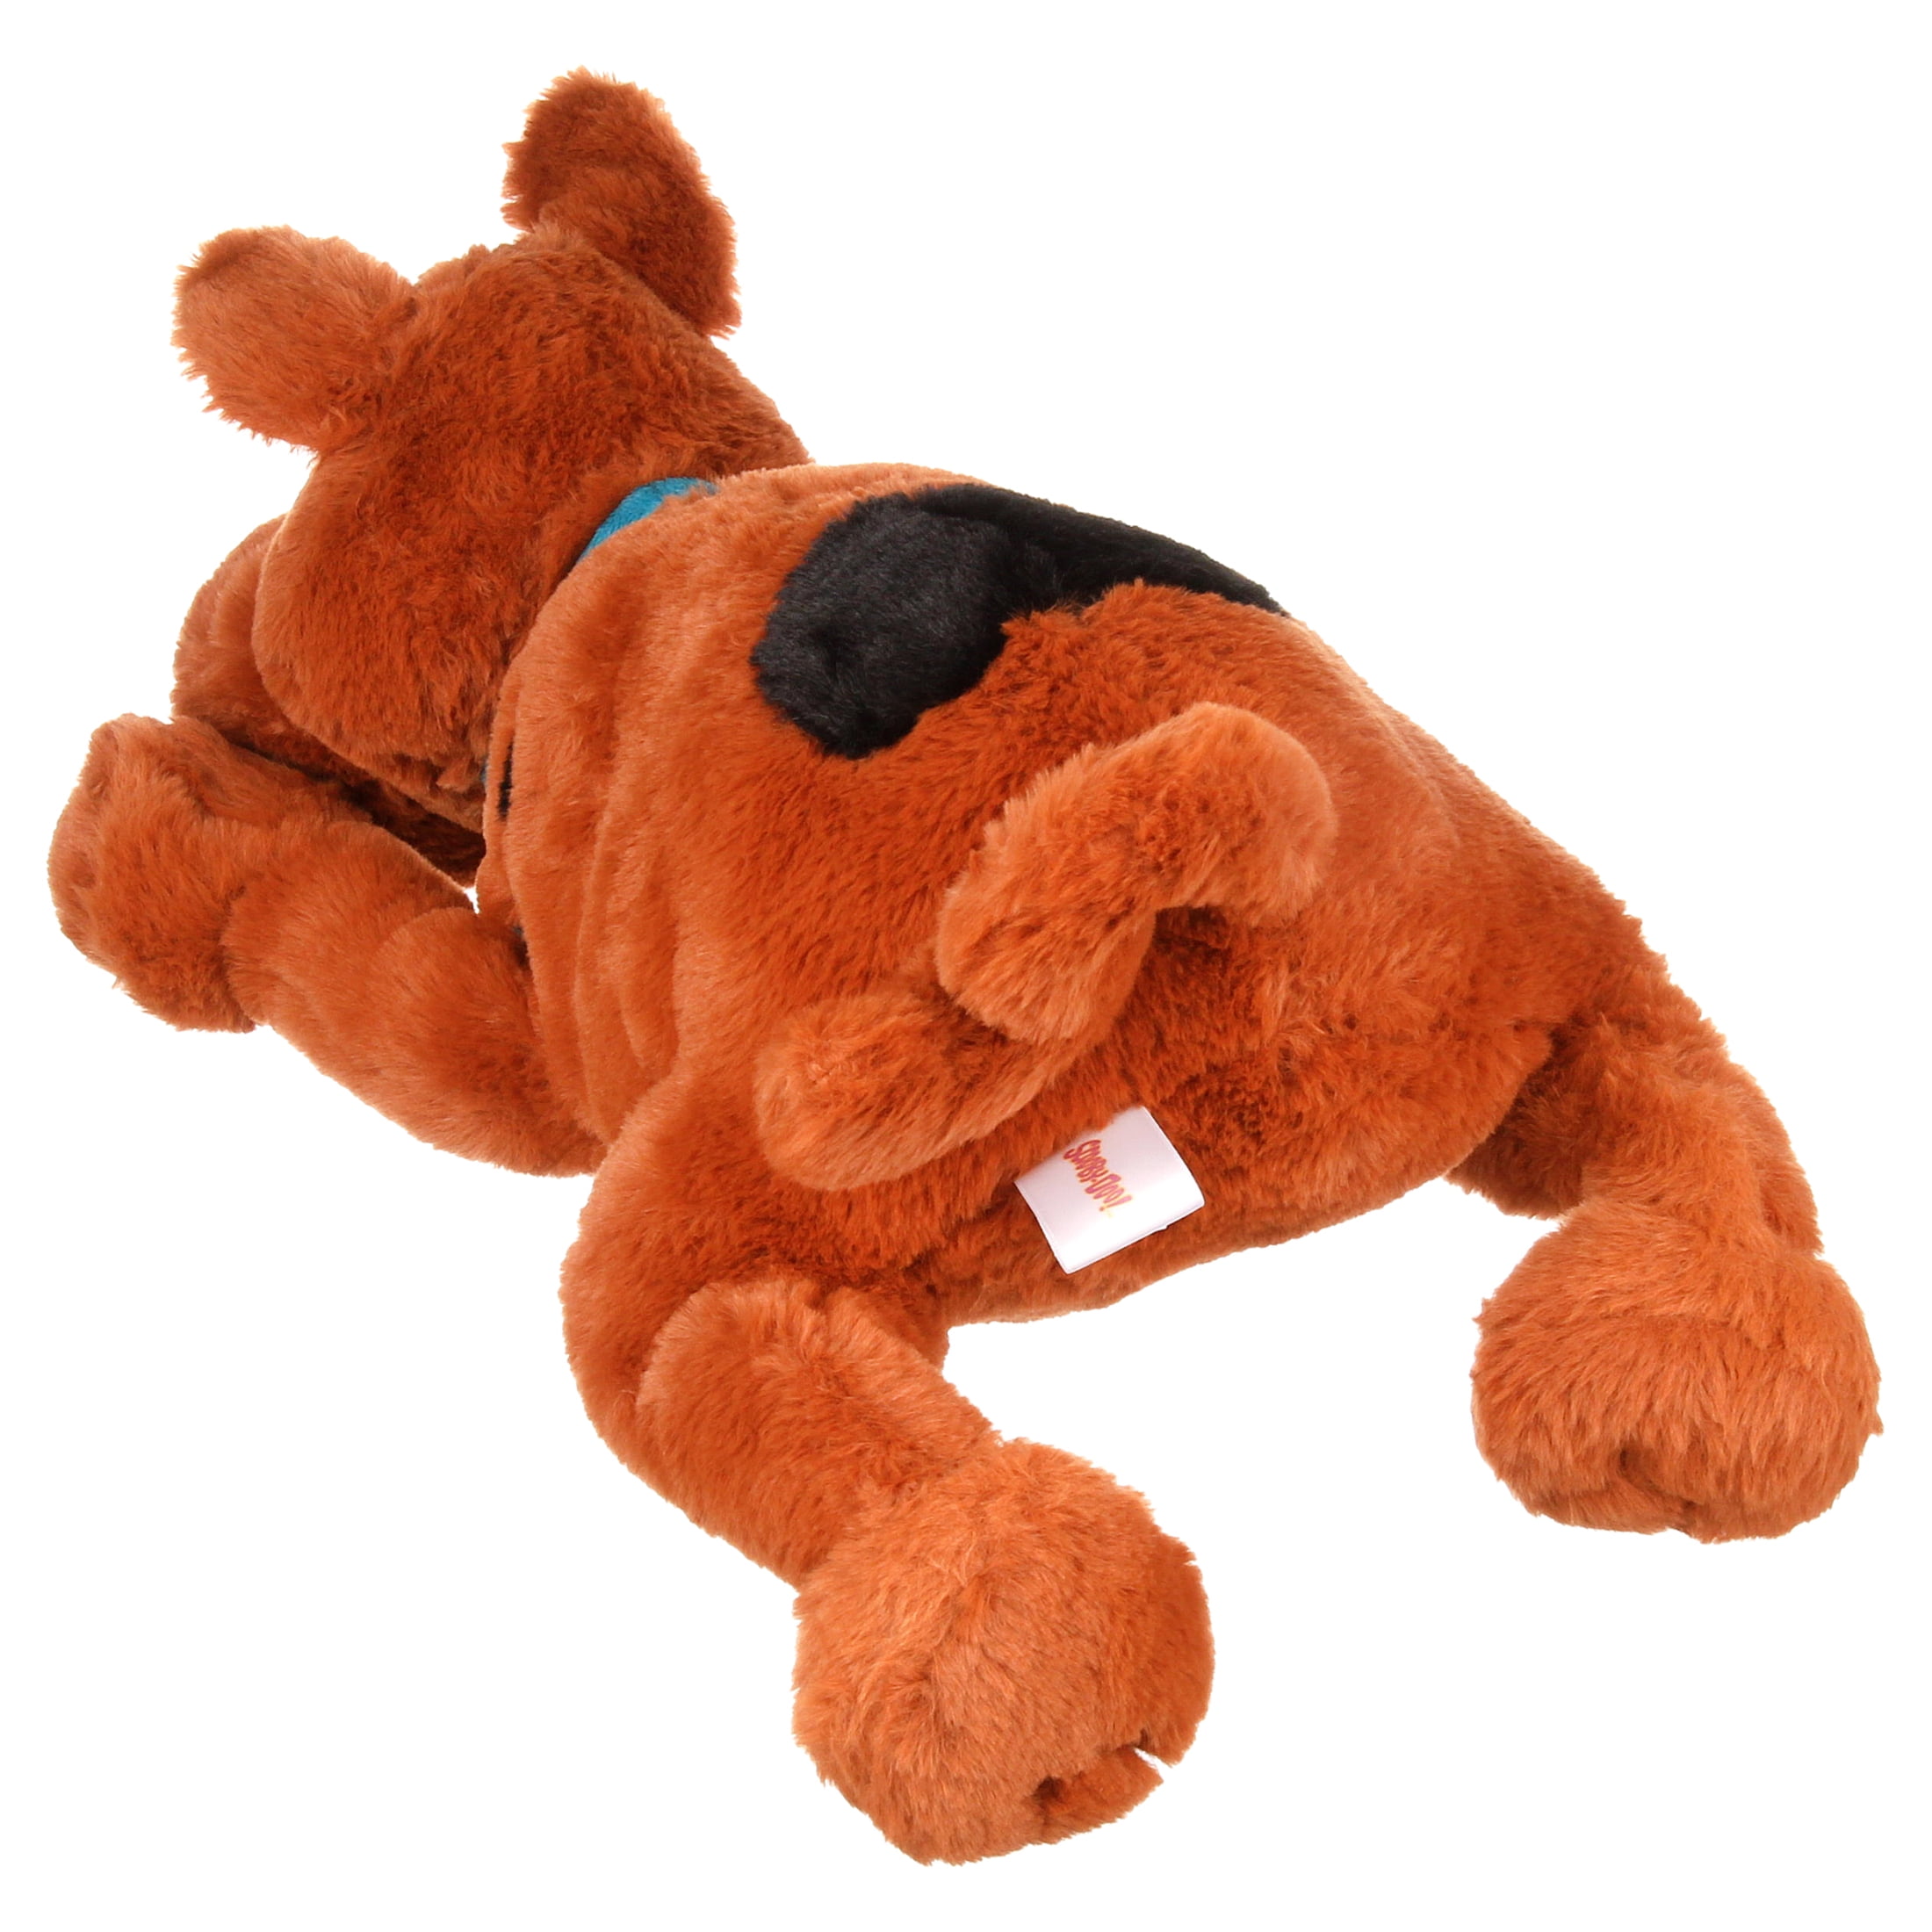 12'' Scooby Doo Soft Plush Toy Stuffed Animal Doll Cuddly Teddy Kids Best Gifts